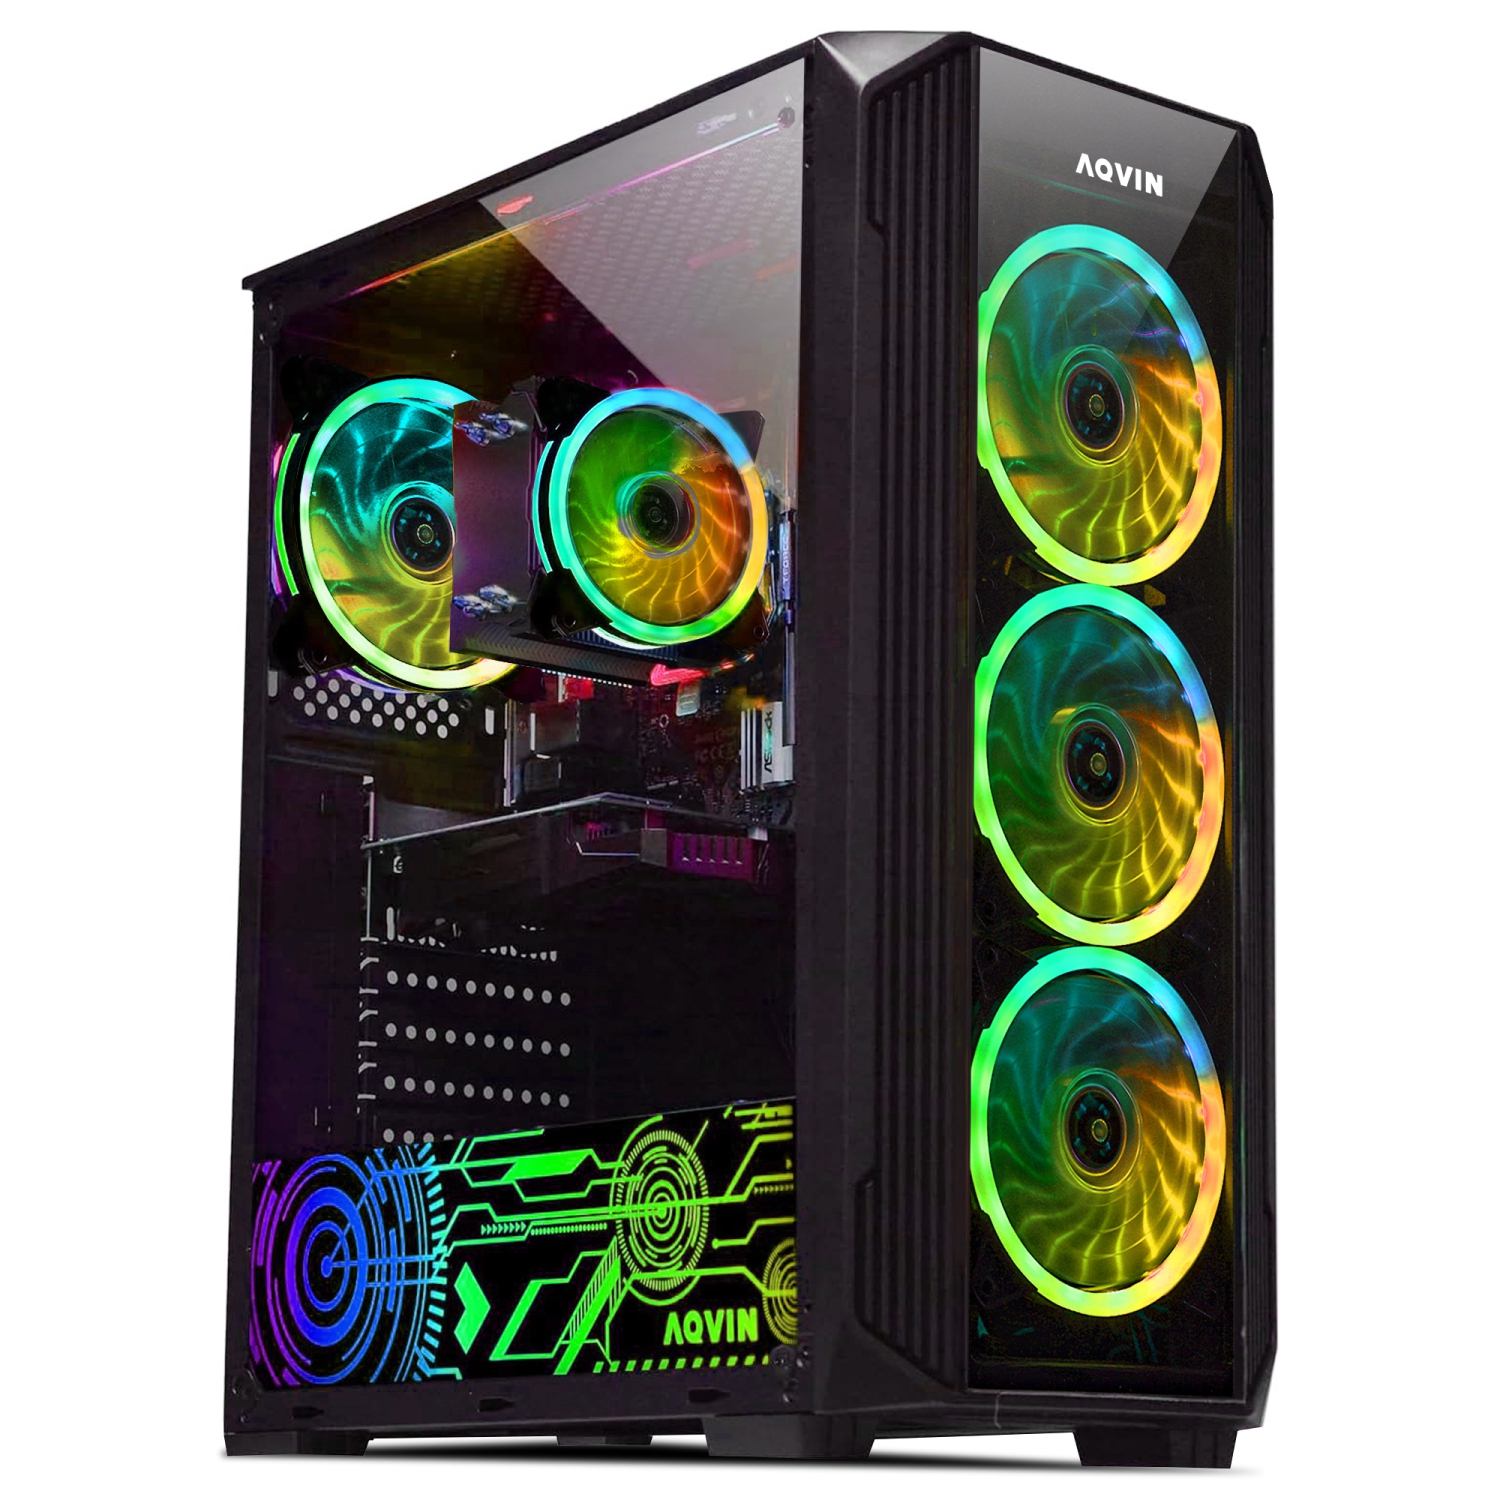 Refurbished (Excellent) - Prebuilt Gaming PC AQVIN ZForce Tower Desktop Computer| Intel Core i7 Processor| 1TB SDD| 32GB DDR4 RAM| GeForce GTX 1650 4GB| Windows 10 Pro| PCIe Wi-Fi